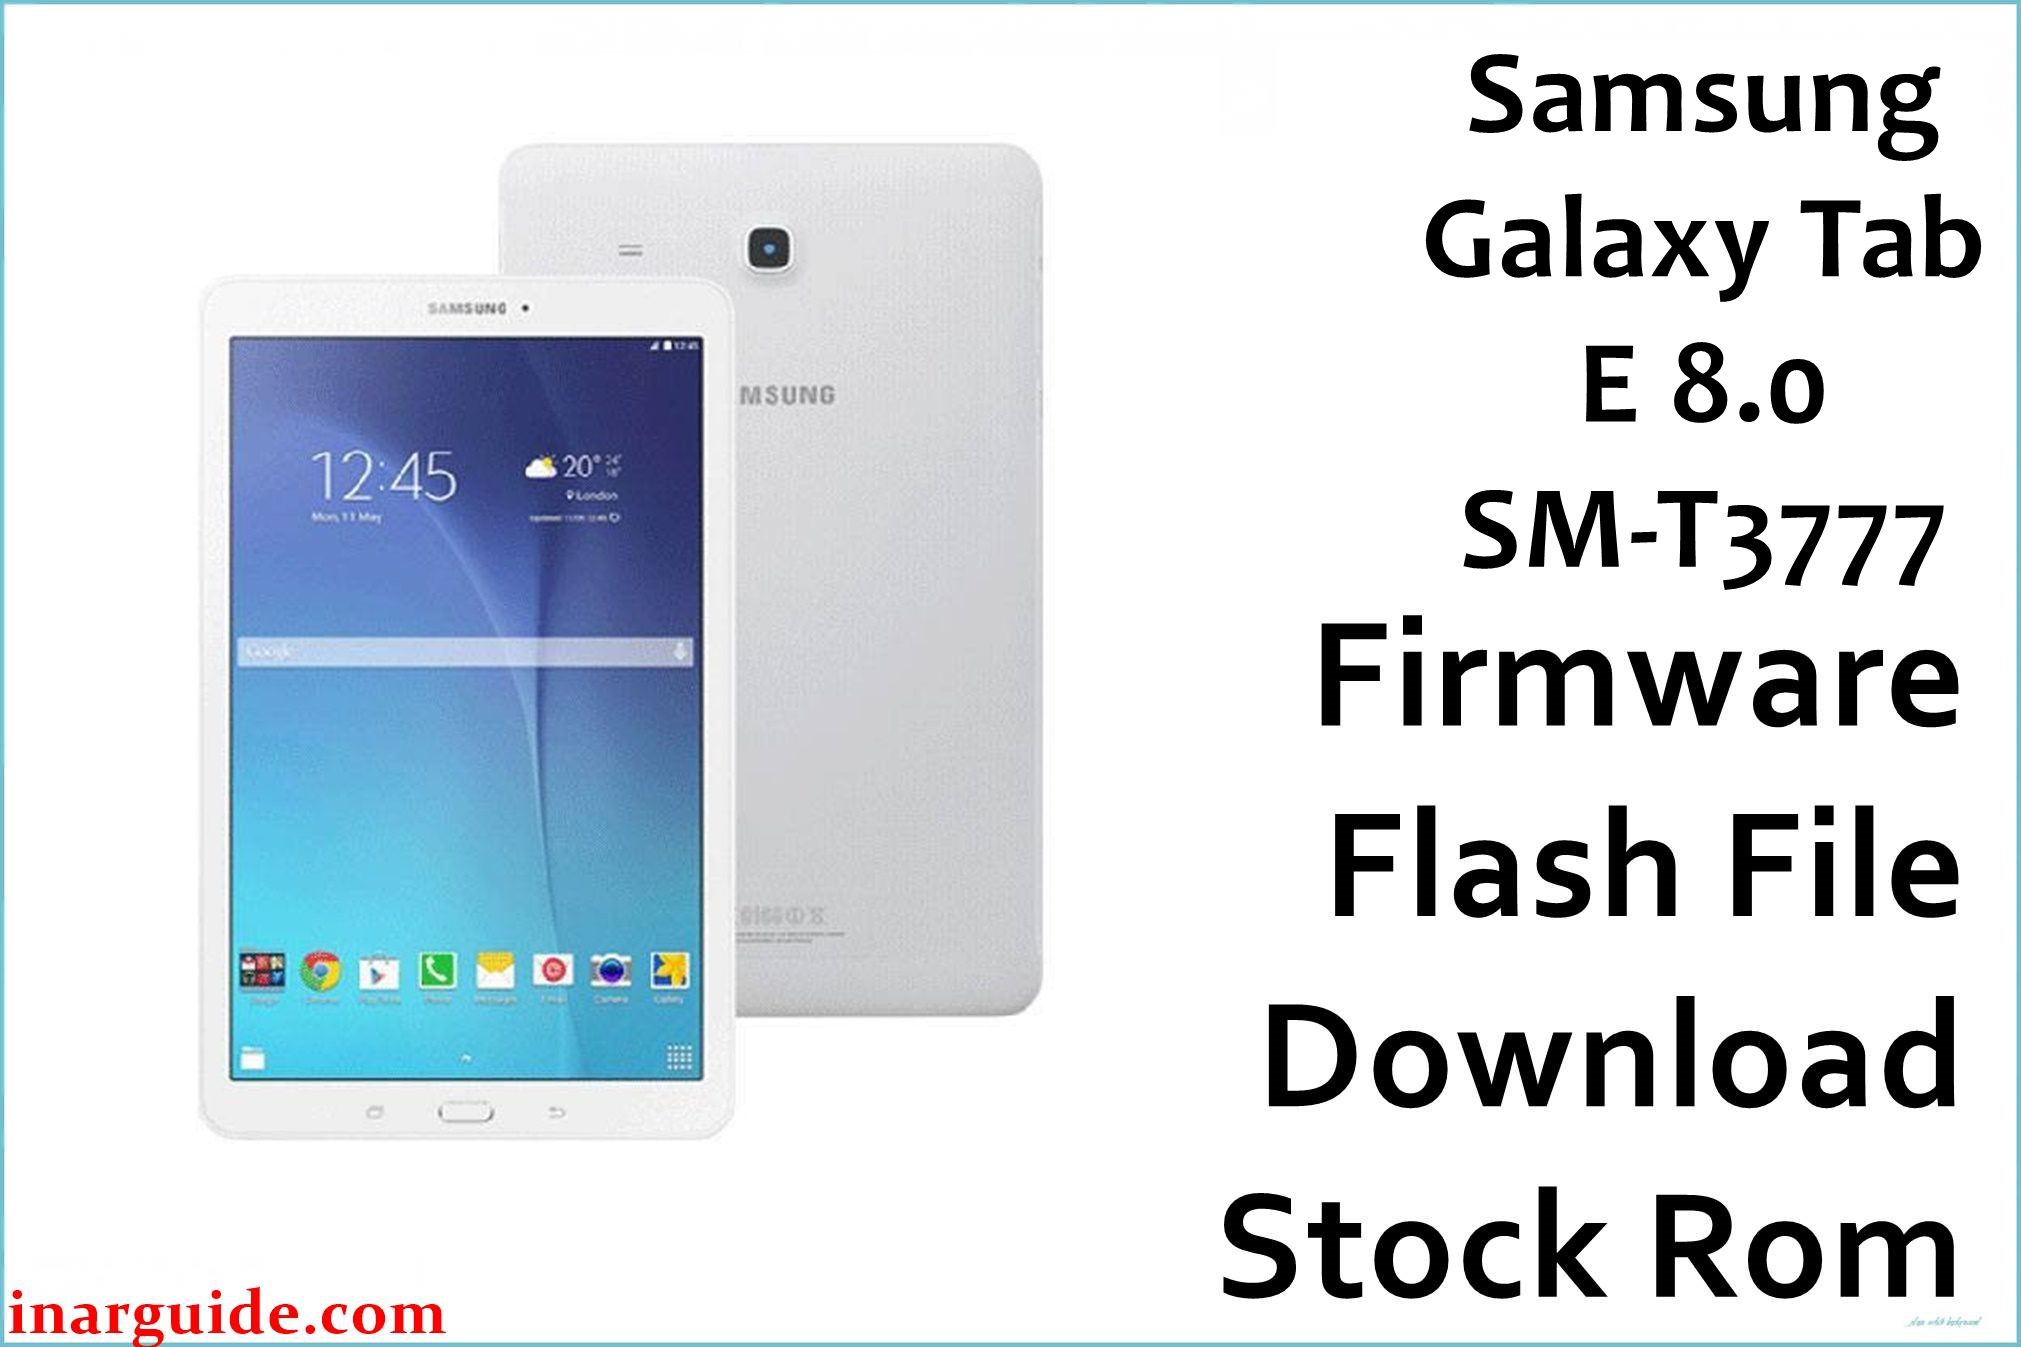 Samsung Galaxy Tab E 8.0 SM T3777